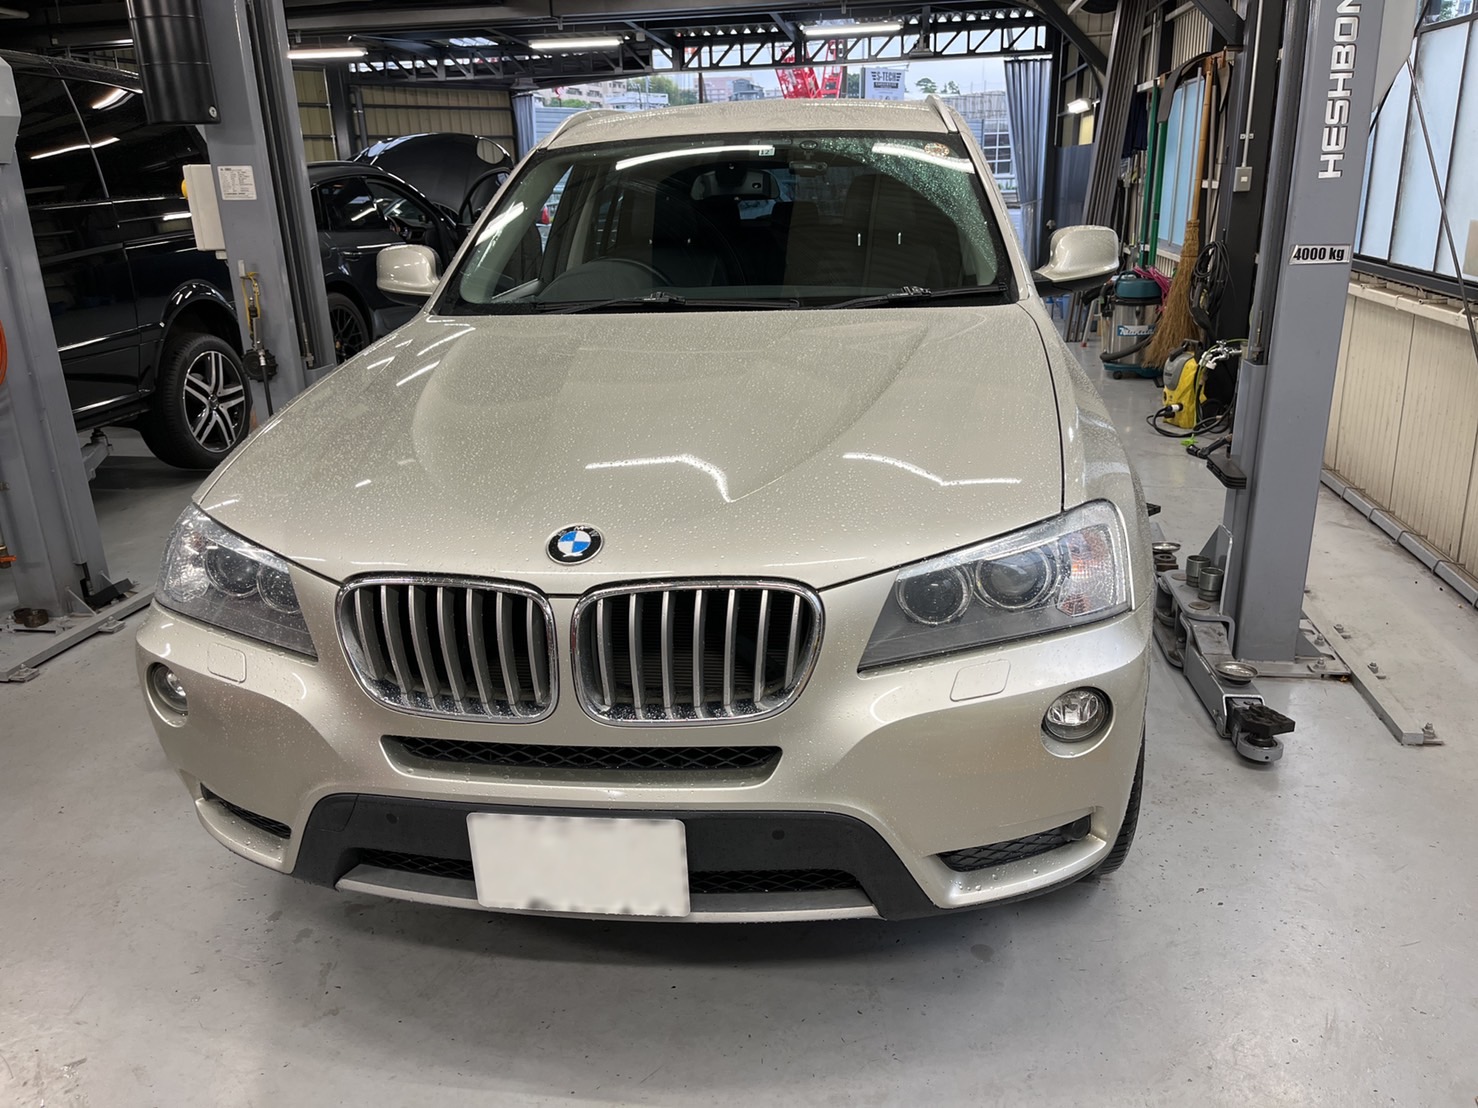 BMW F25 X3 ABA-WX35 エンジンオイル漏れ修理 作業事例 | 輸入車修理専門店 S-TECH carservice  (エステックカーサービス) ベンツ・BMW・ジャガー・ポルシェなどの外車修理・鈑金塗装